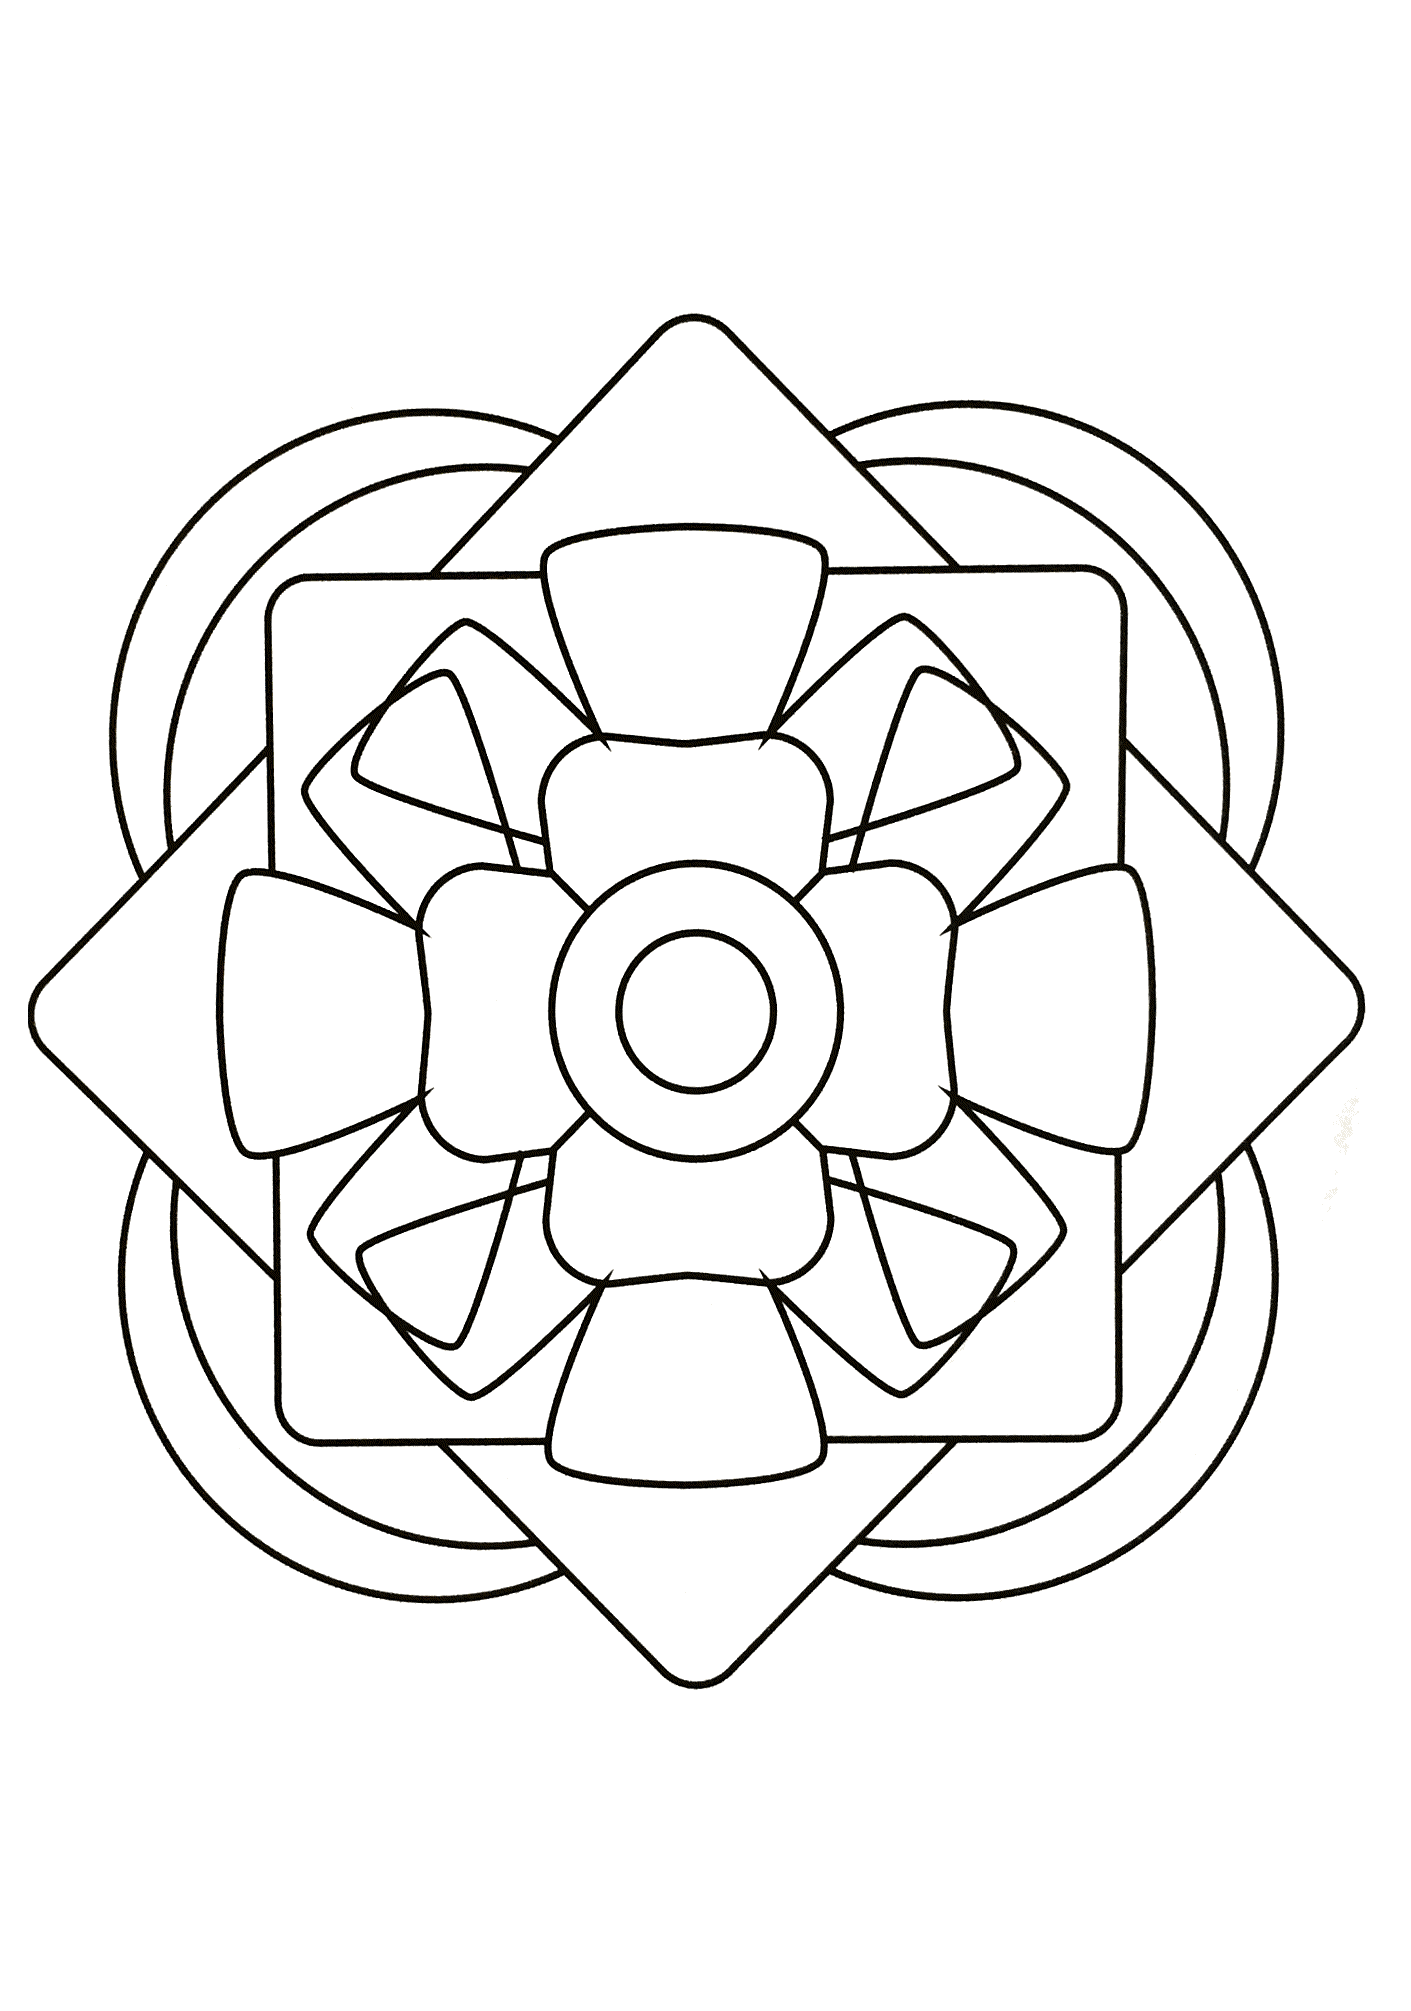 Mandalas geometric to print 8